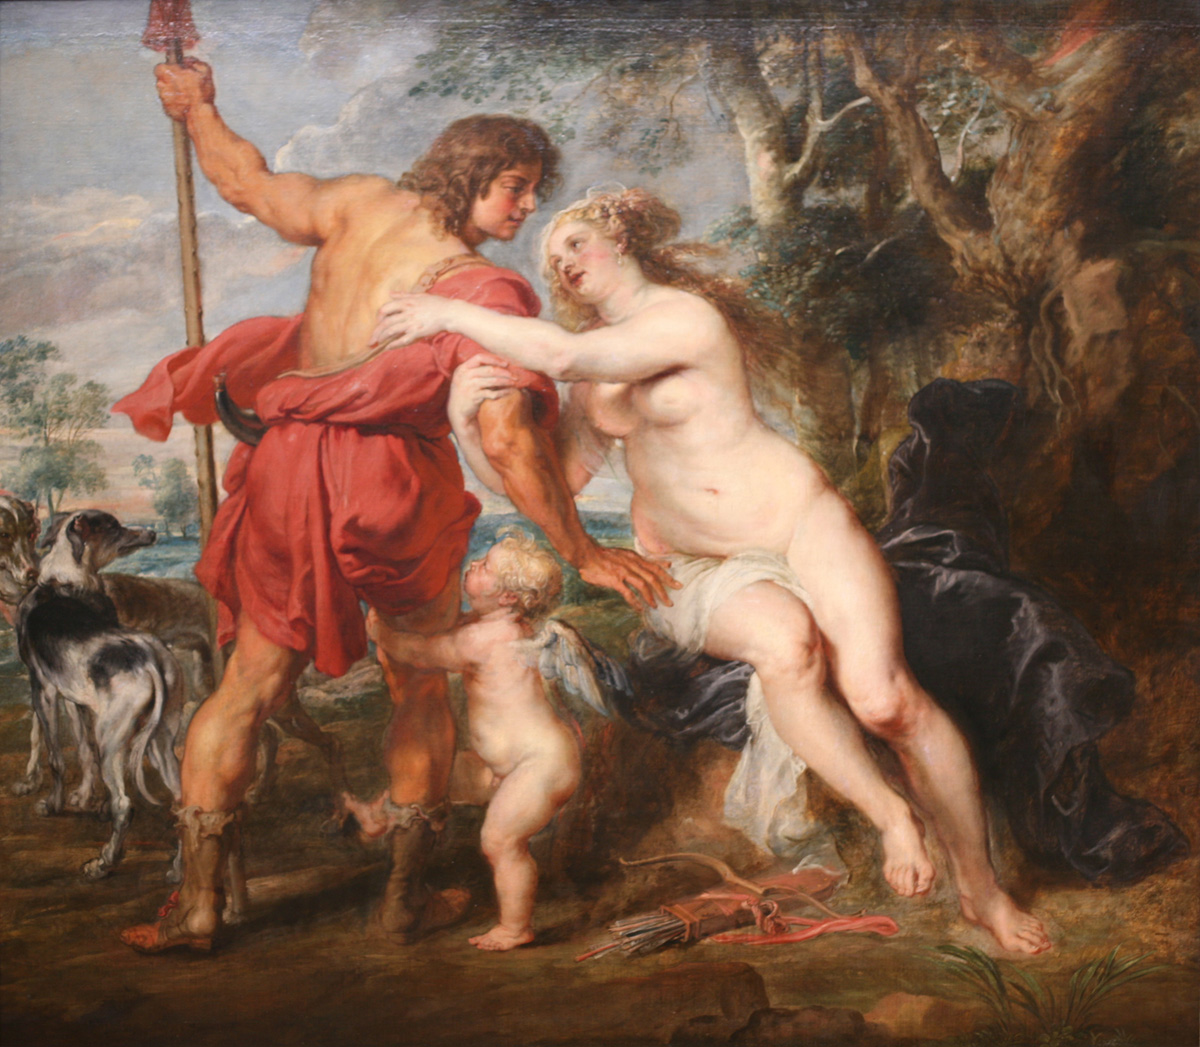 /800/600/https/upload.wikimedia.org/wikipedia/commons/6/6c/WLA_metmuseum_Venus_and_Adonis_by_Peter_Paul_Rubens.jpg